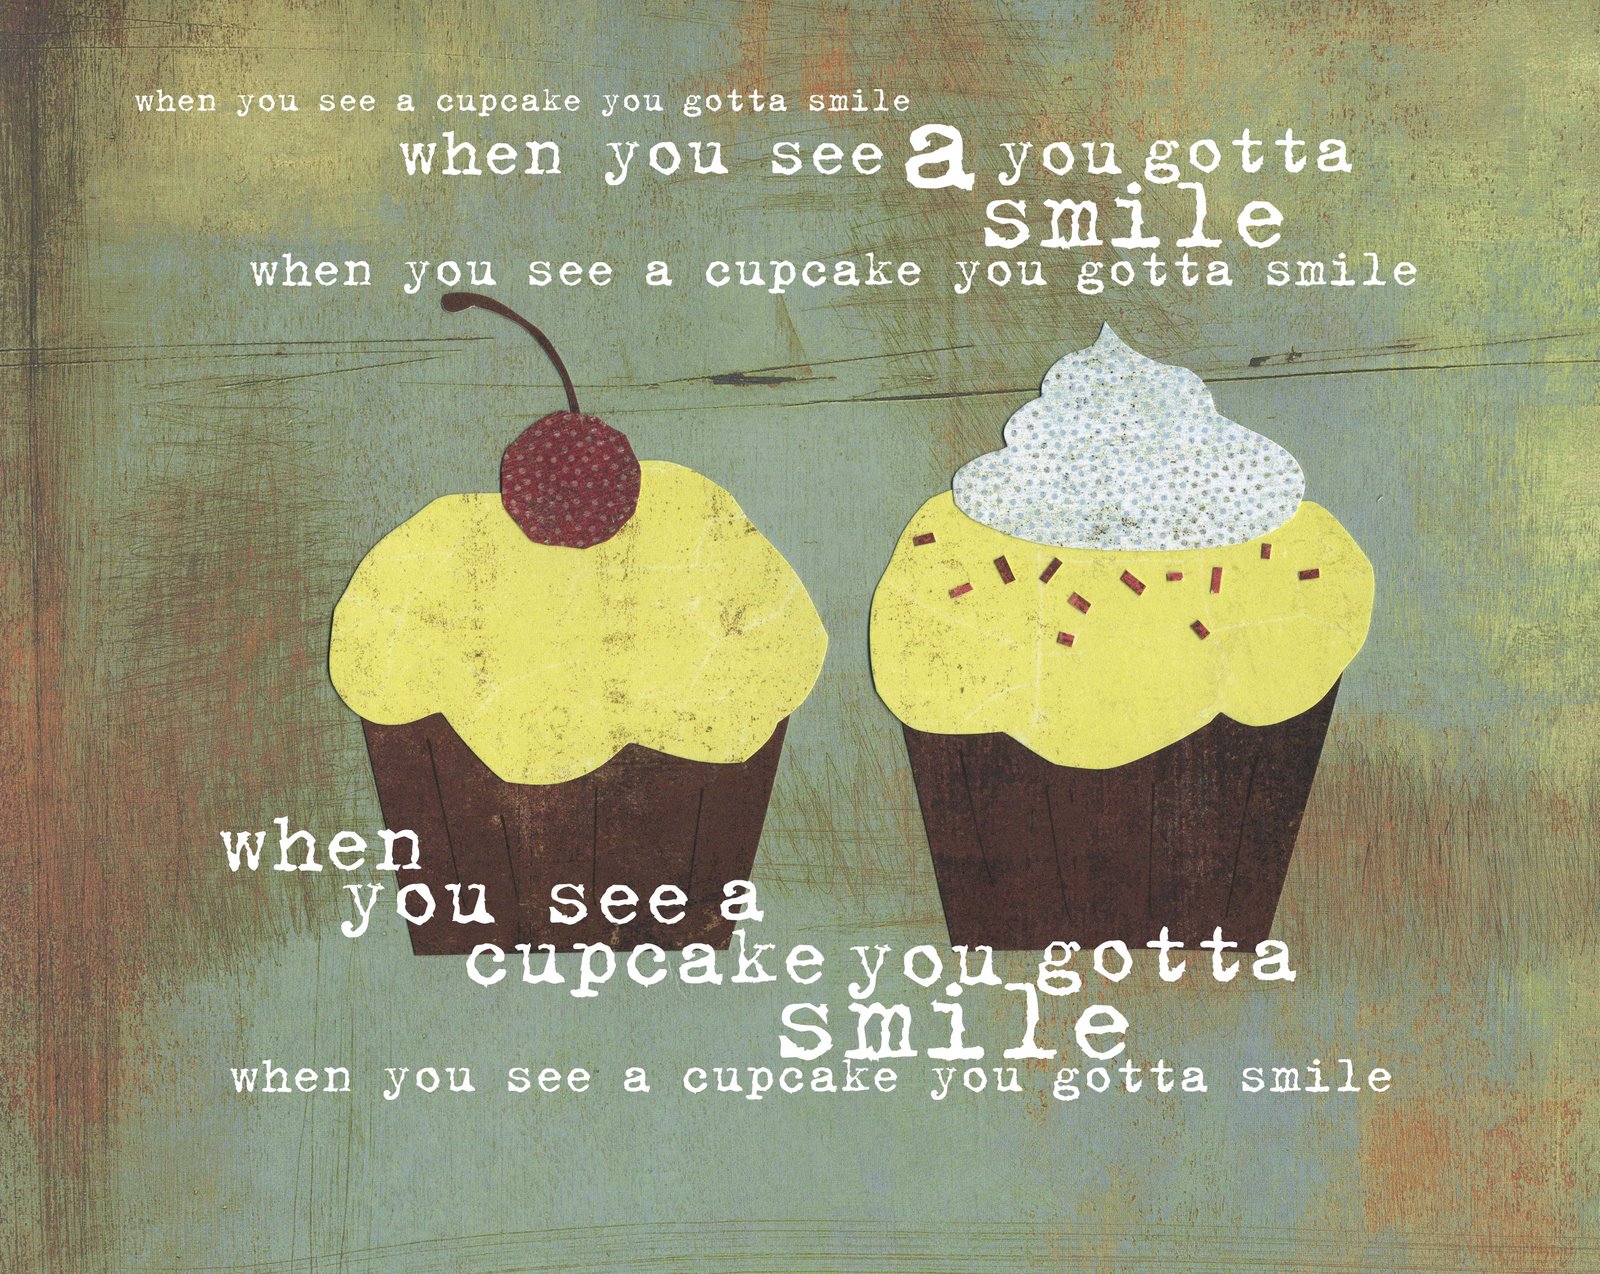 [cupcake+gotta+smile+600dpi.jpg]